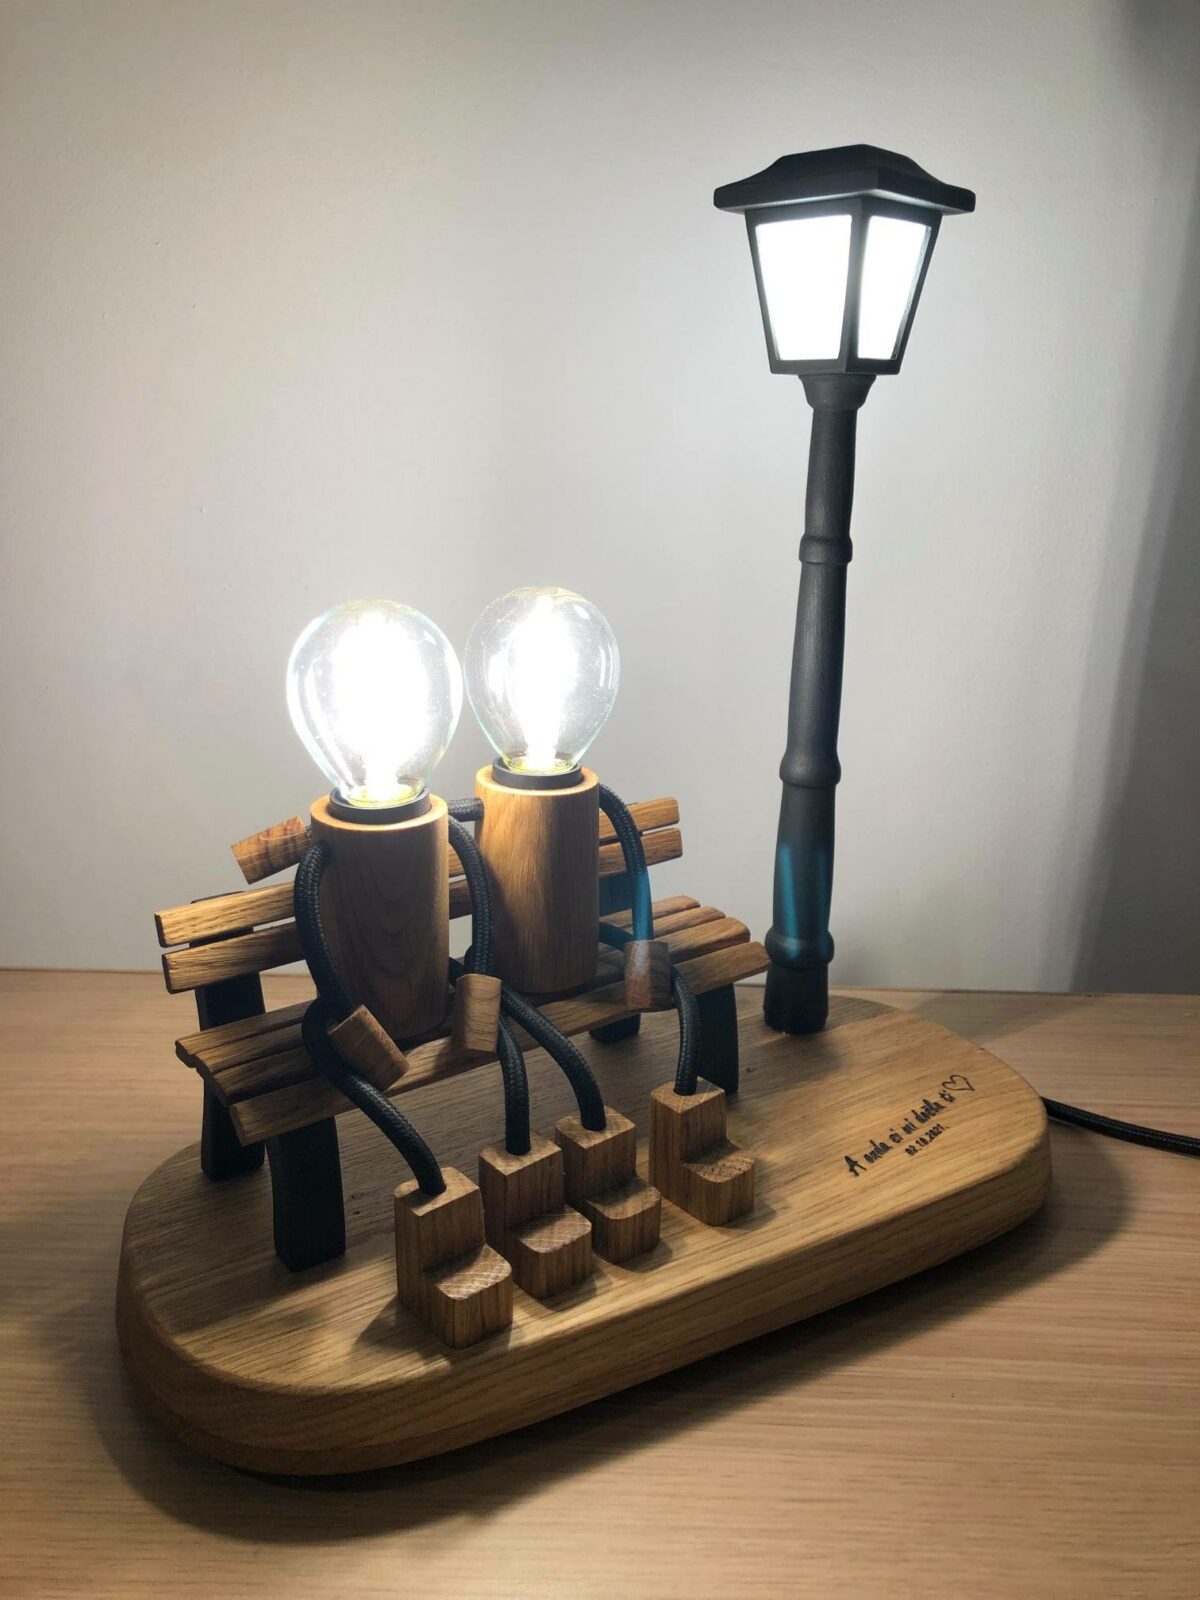 Creative Lamps Of Light Bulb Head Figures By Ivan Cvitkovic 23